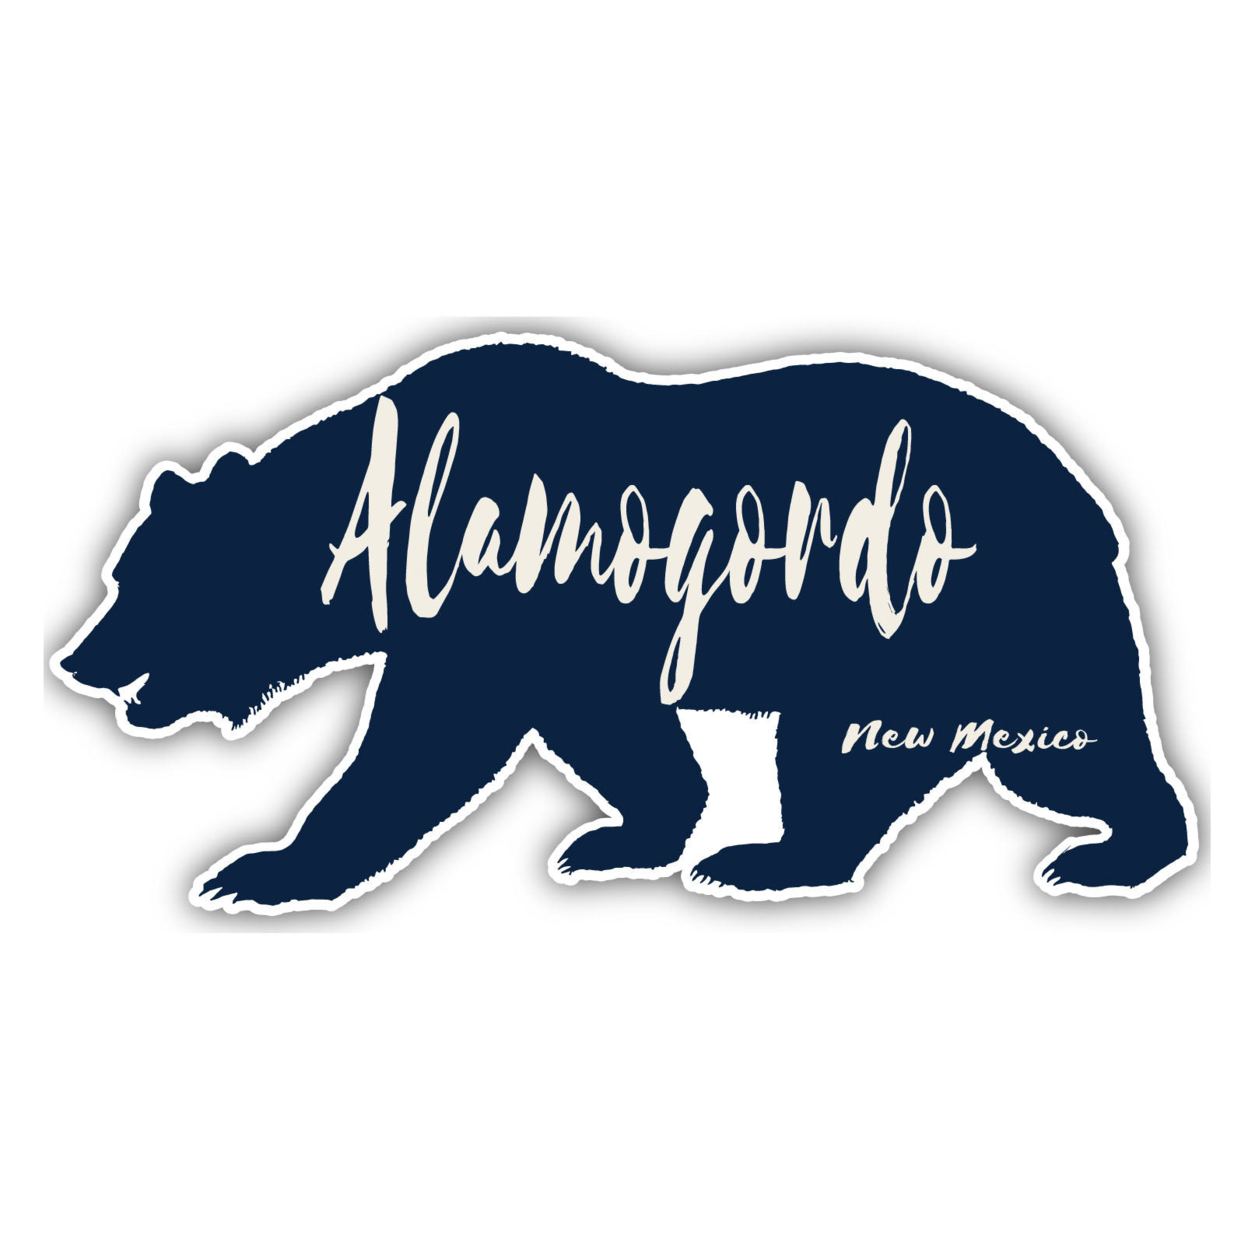 Alamogordo New Mexico Souvenir Decorative Stickers (Choose Theme And Size) - 4-Pack, 8-Inch, Bear